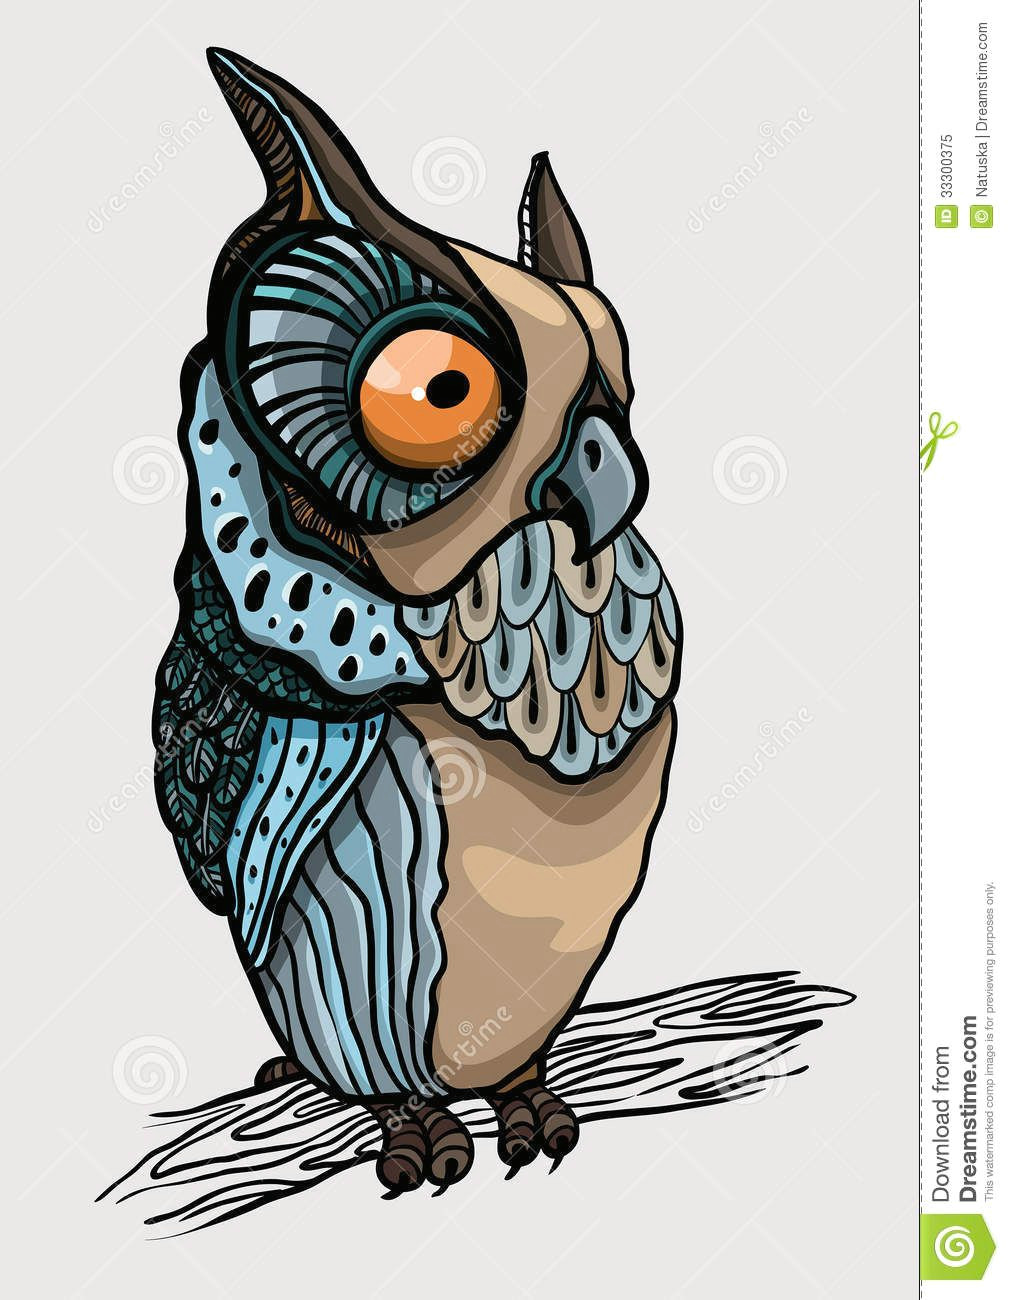 Drawing A Cartoon Owl Cartoon Owl Royalty Free Stock Photo Image 33300375 Malarstwo